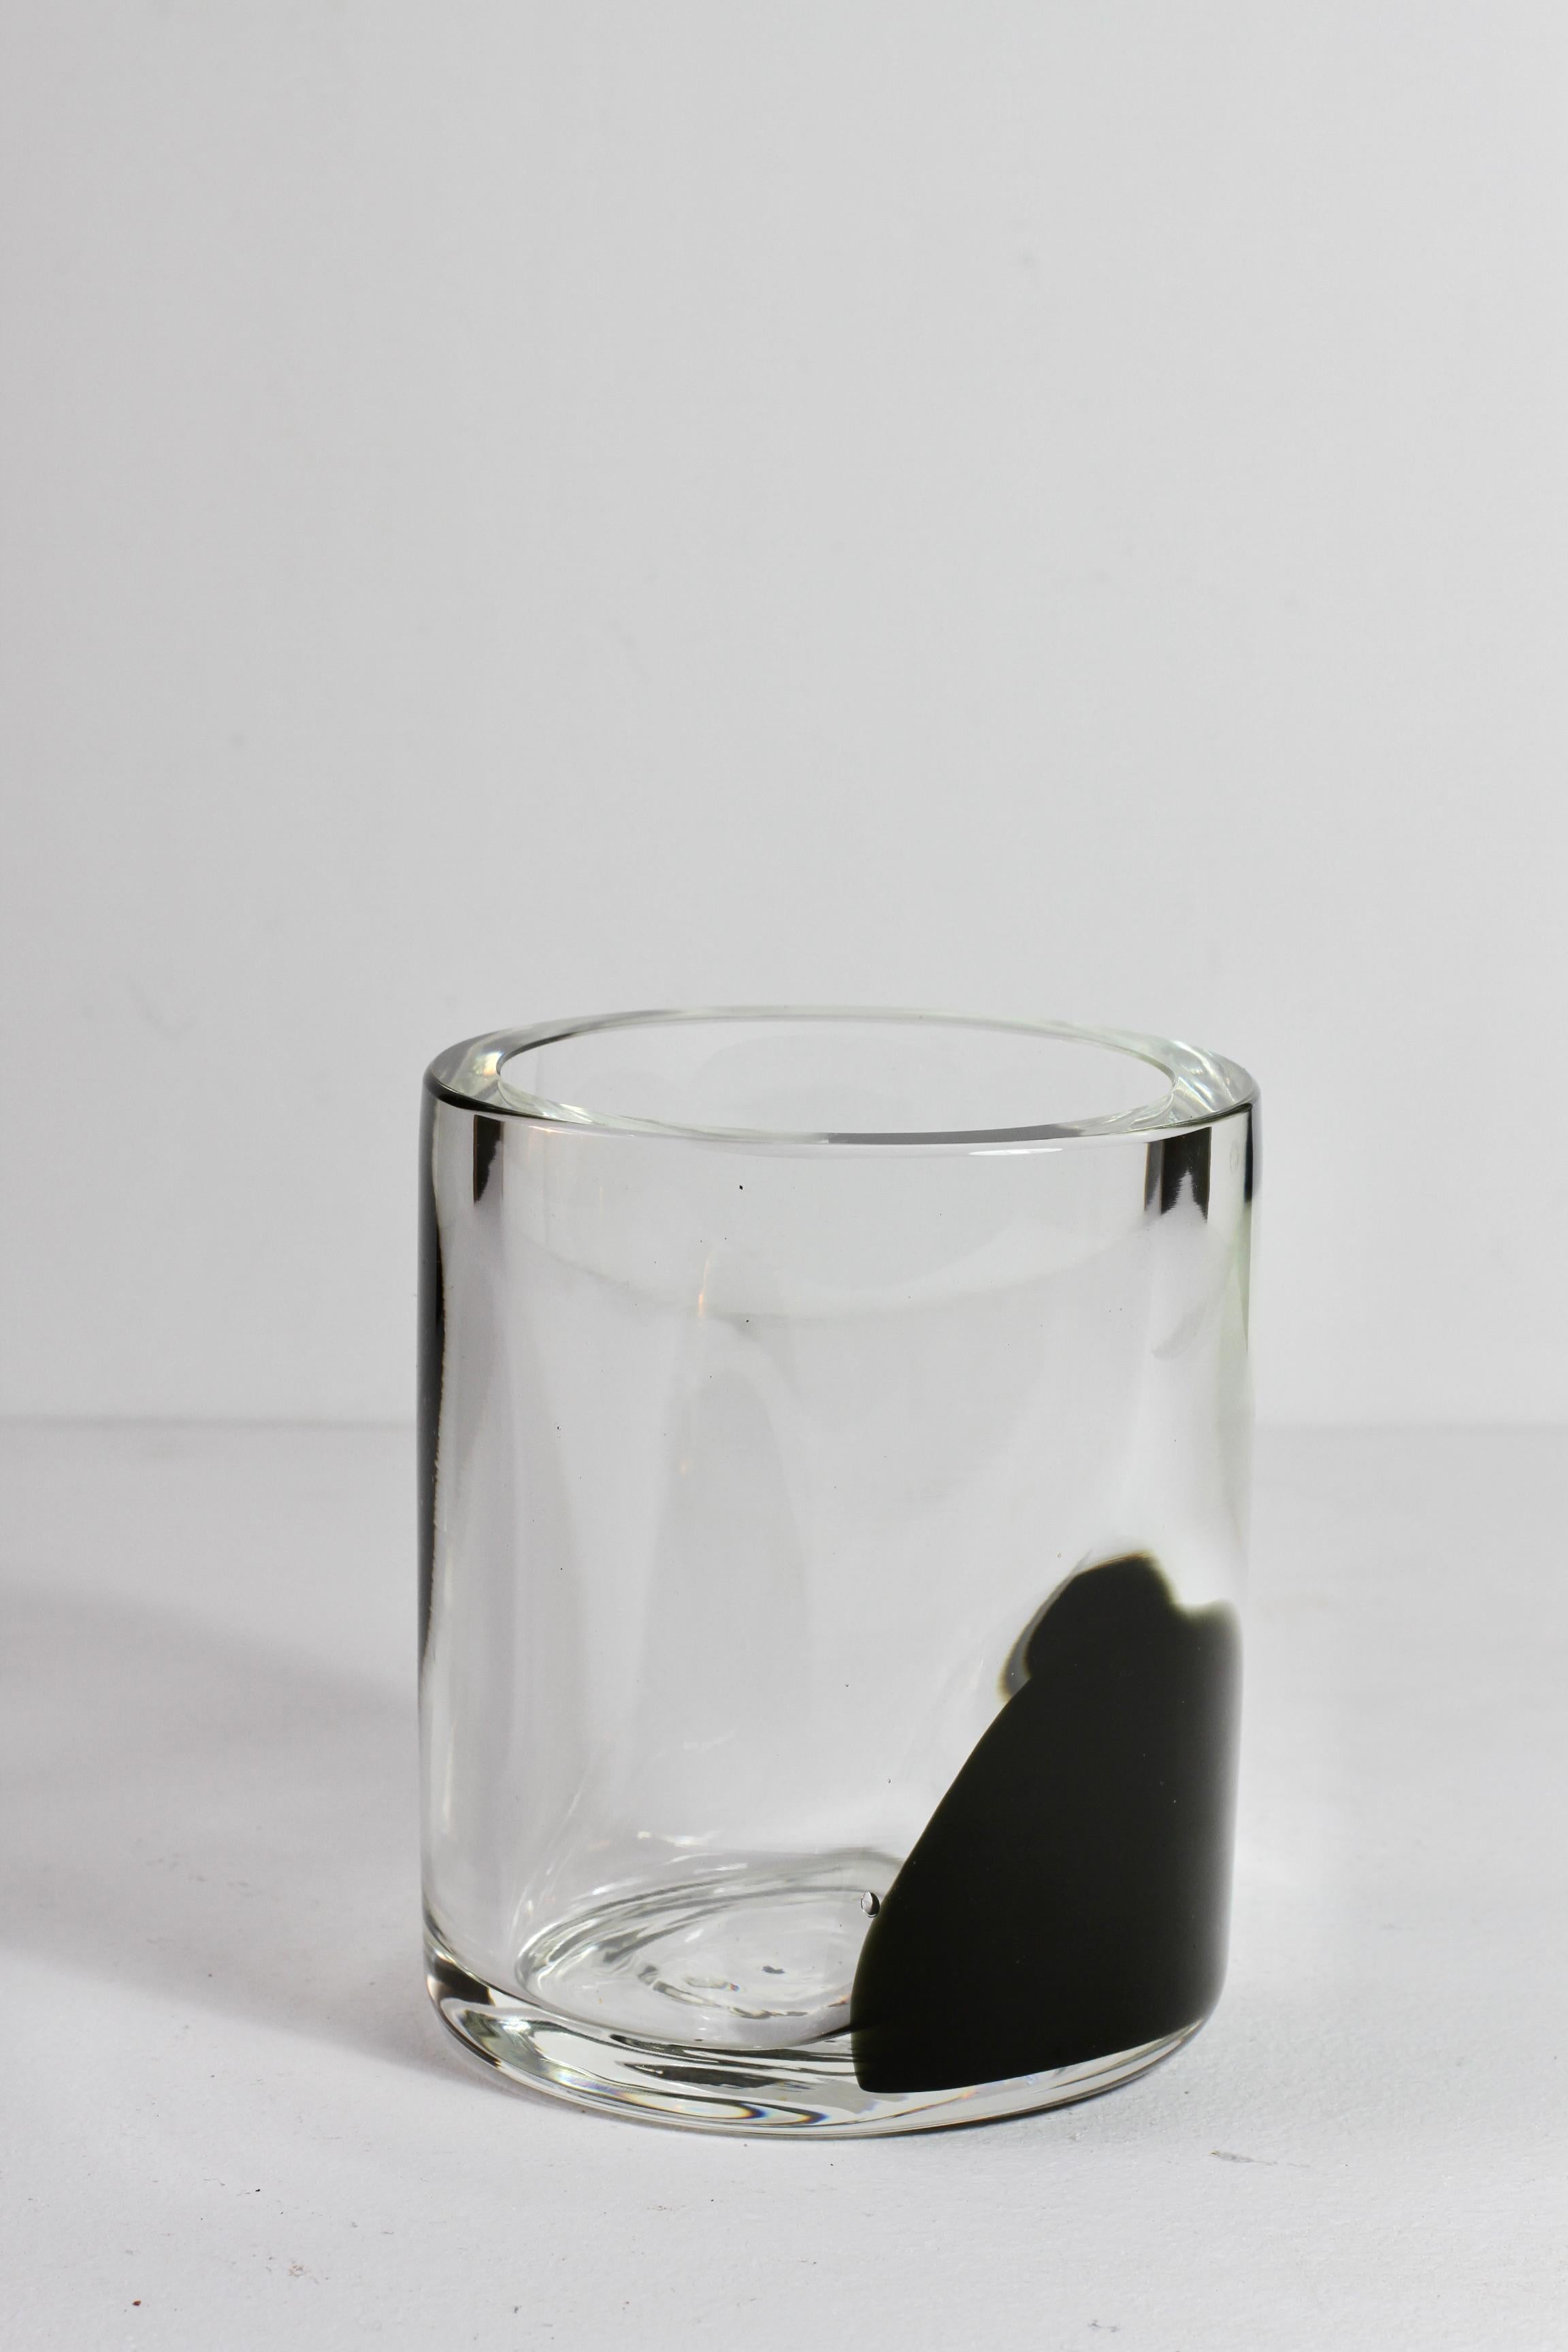 Antonio Da Ros for Cenedese 1970s Italian Round Black & Clear Murano Glass Vase For Sale 2